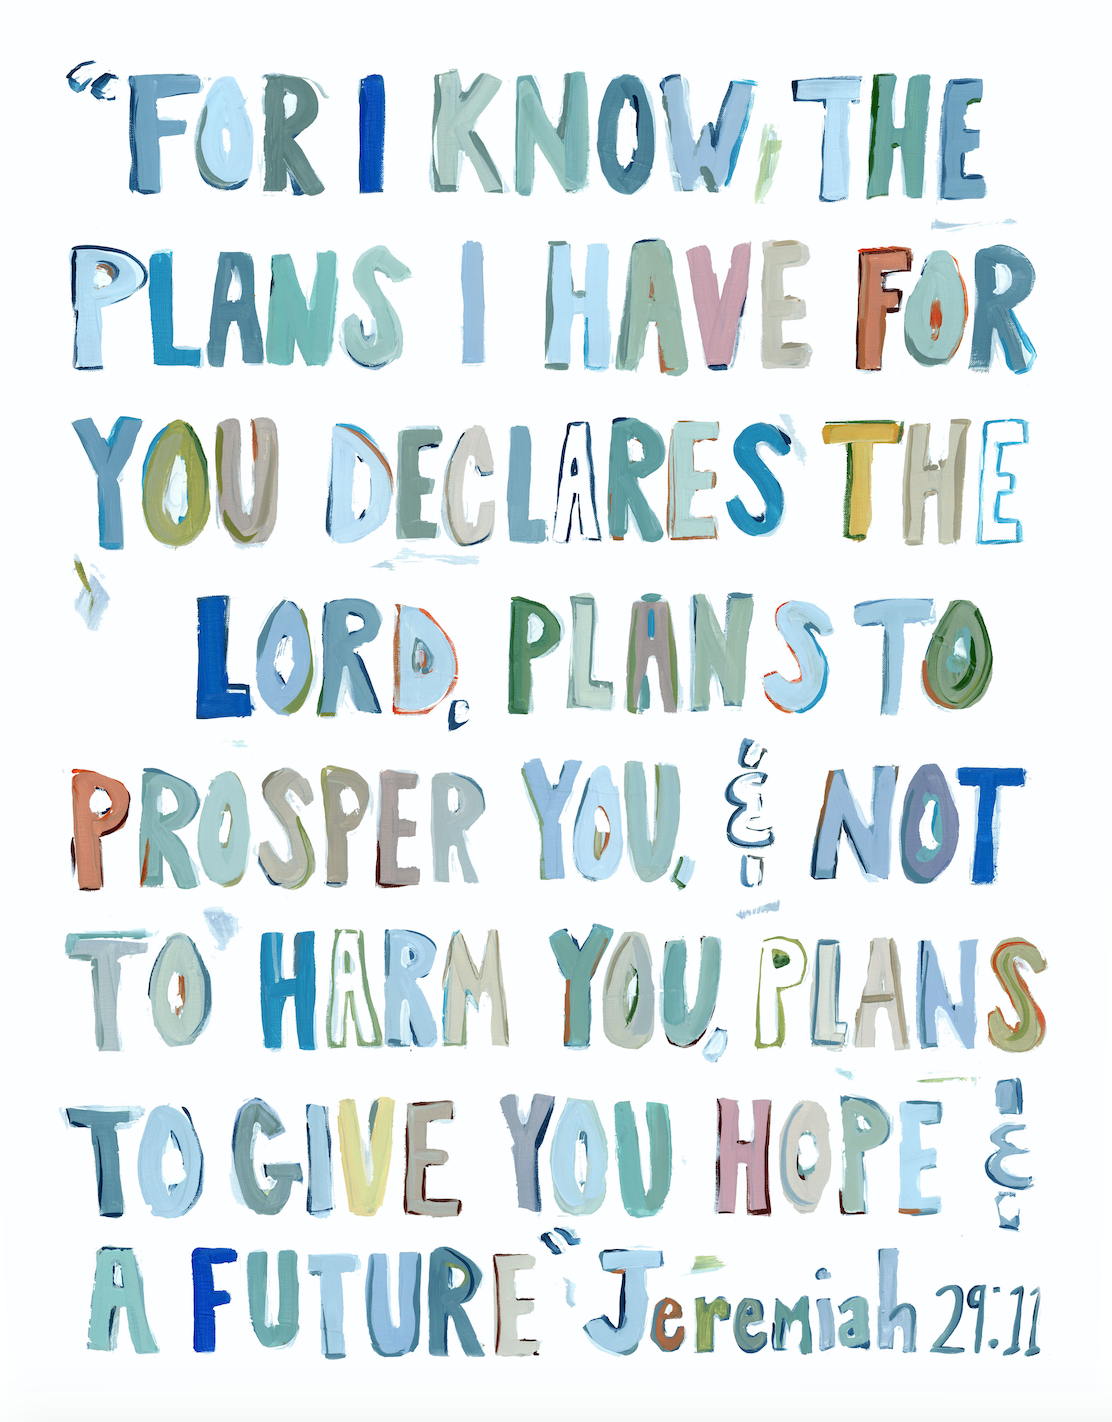 Jeremiah 29:11 on paper